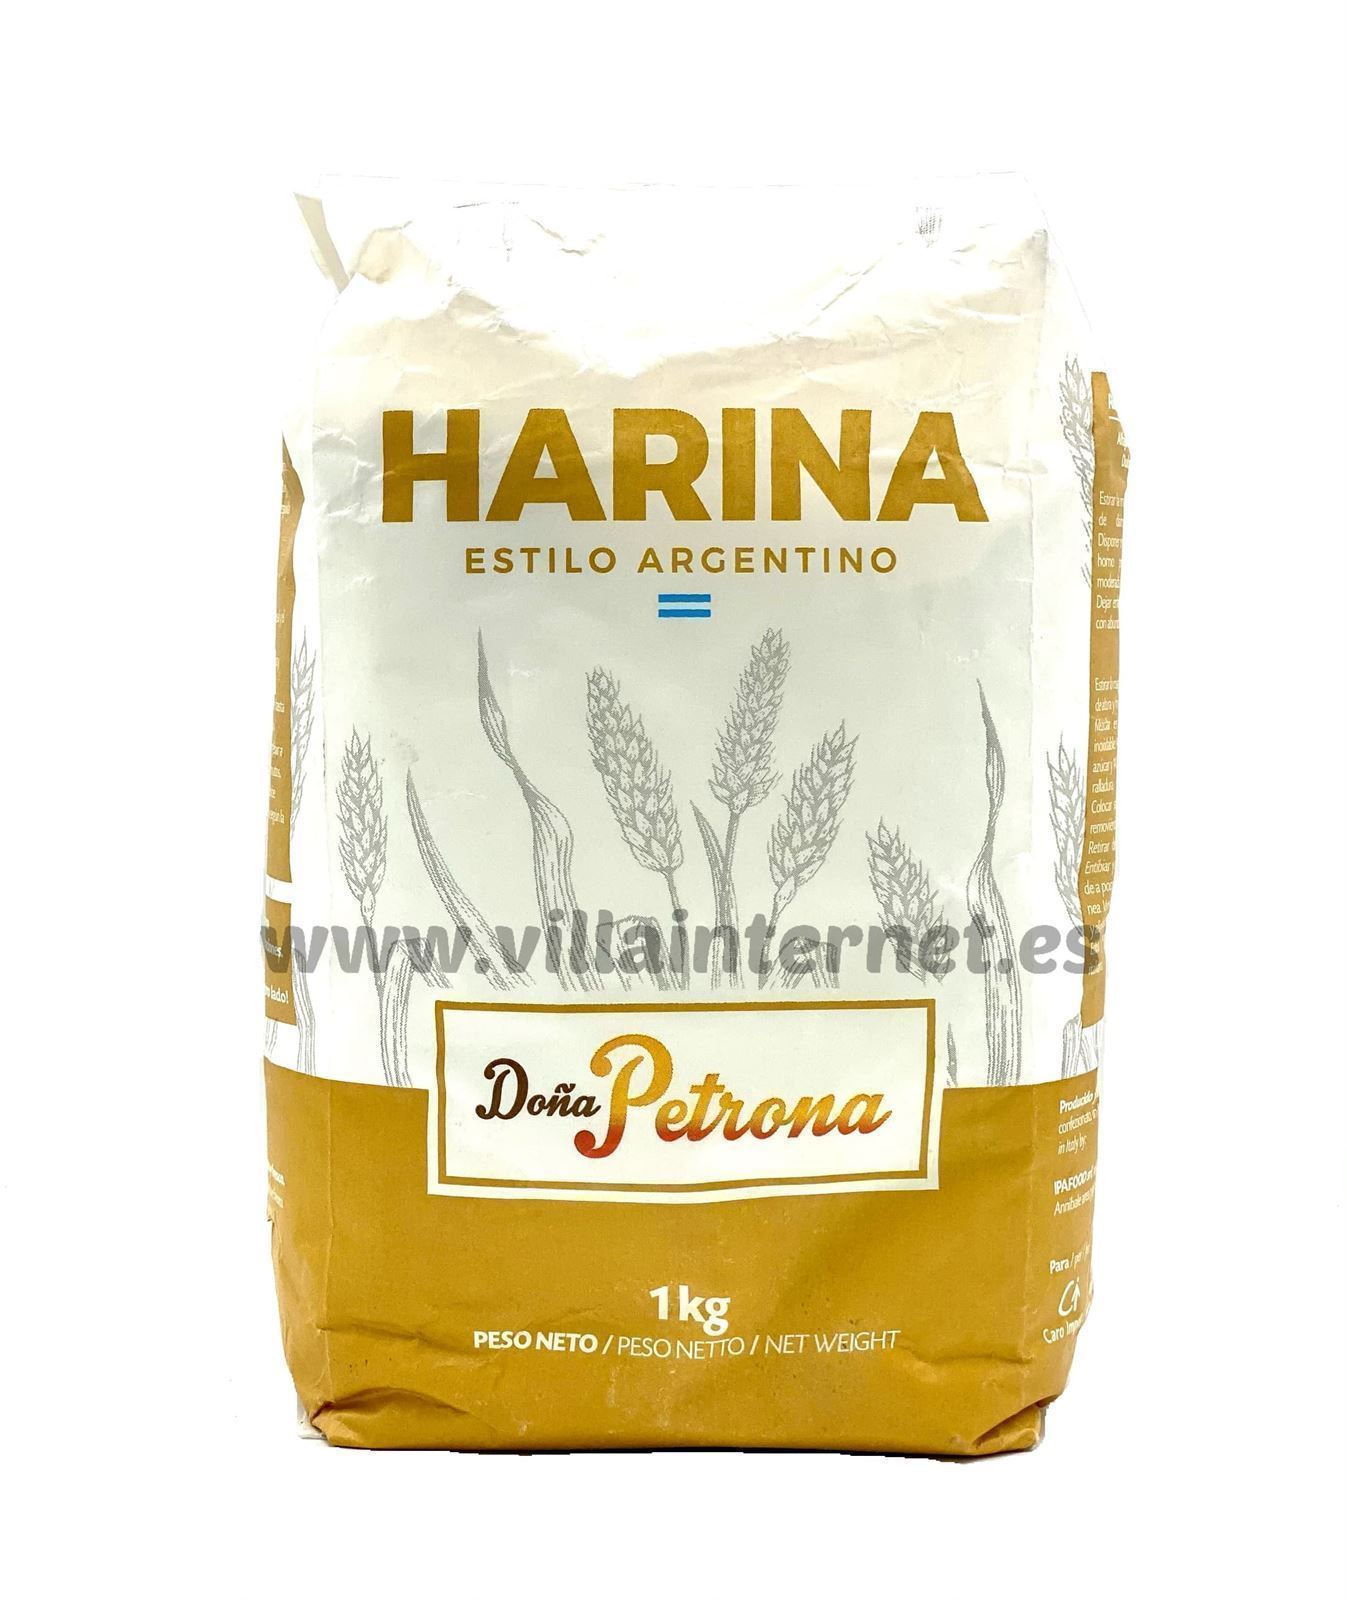 Harina estilo argentino 1Kg - Imagen 1